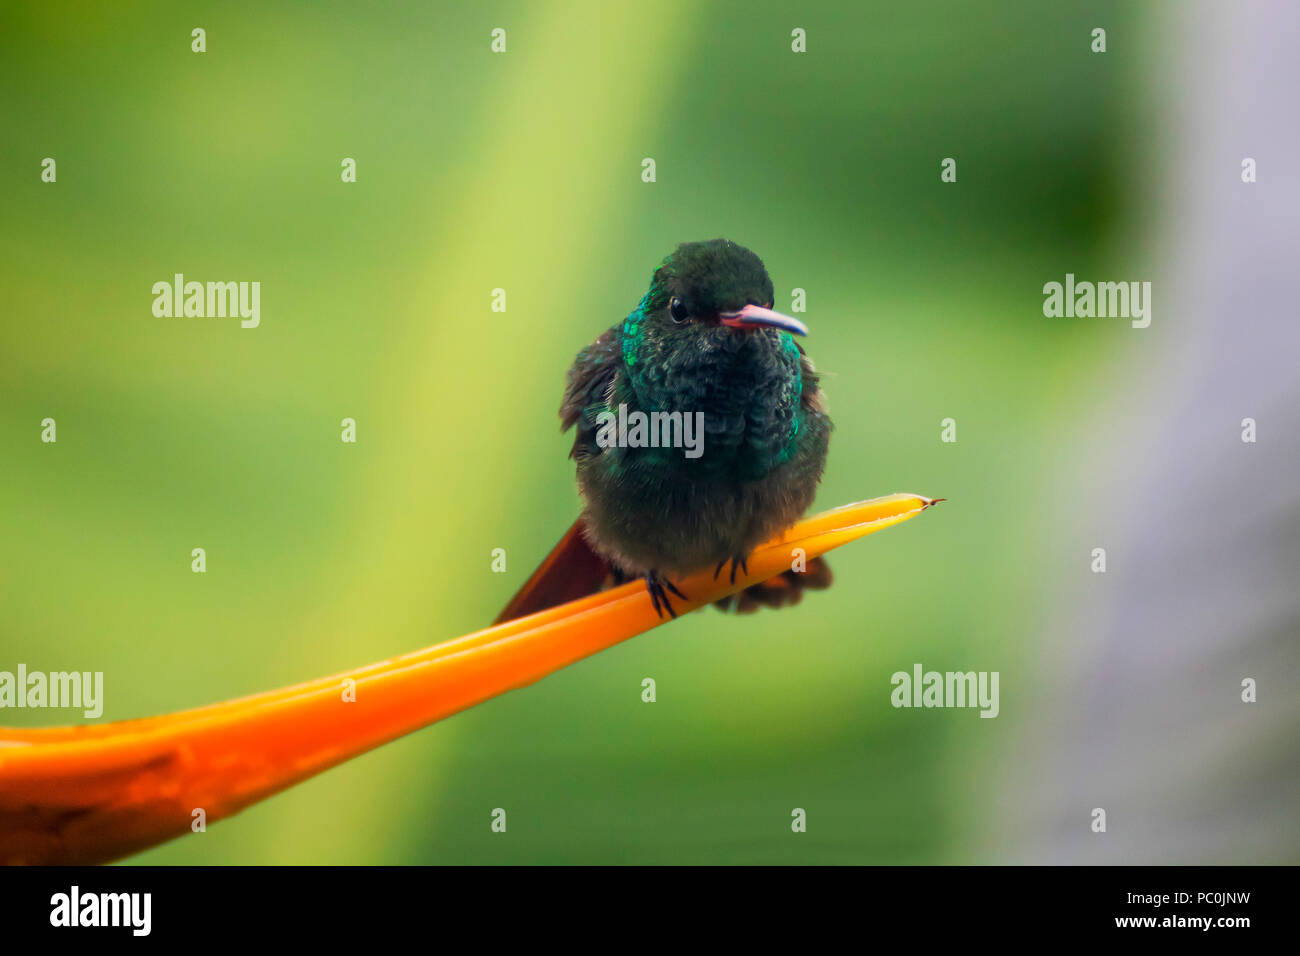 Tiny Fluffy Hummingbird in Tip of Orange Bird of Paradise Flower Stock Photo